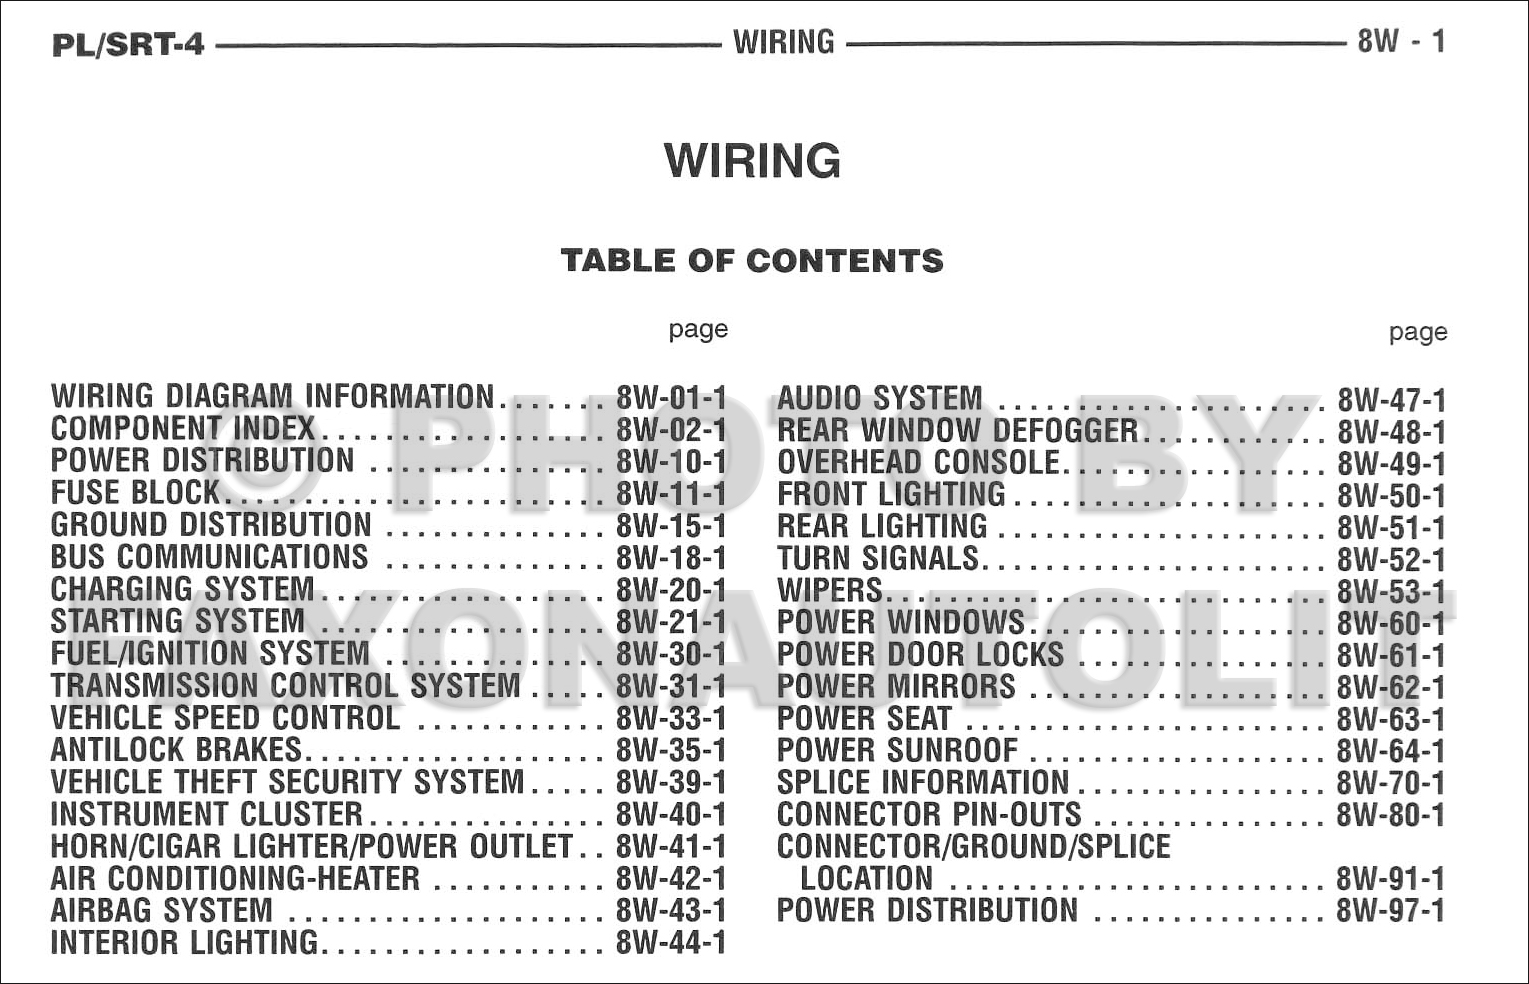 1996 Dodge Neon Stereo Wiring Diagram from cfd84b34cf9dfc880d71-bd309e0dbcabe608601fc9c9c352796e.ssl.cf1.rackcdn.com